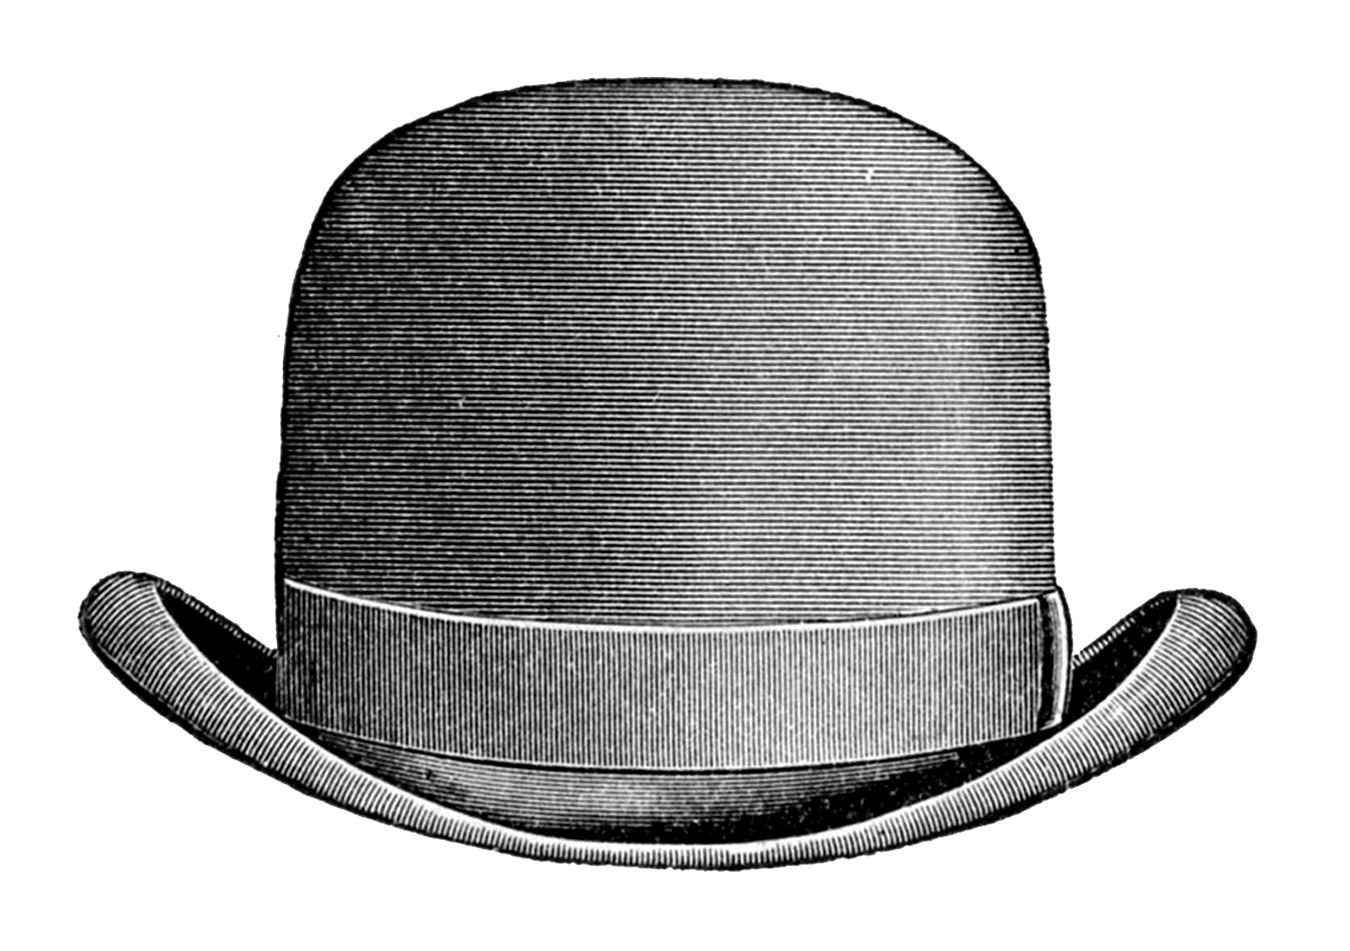 Bowler Hat Clipart 94657